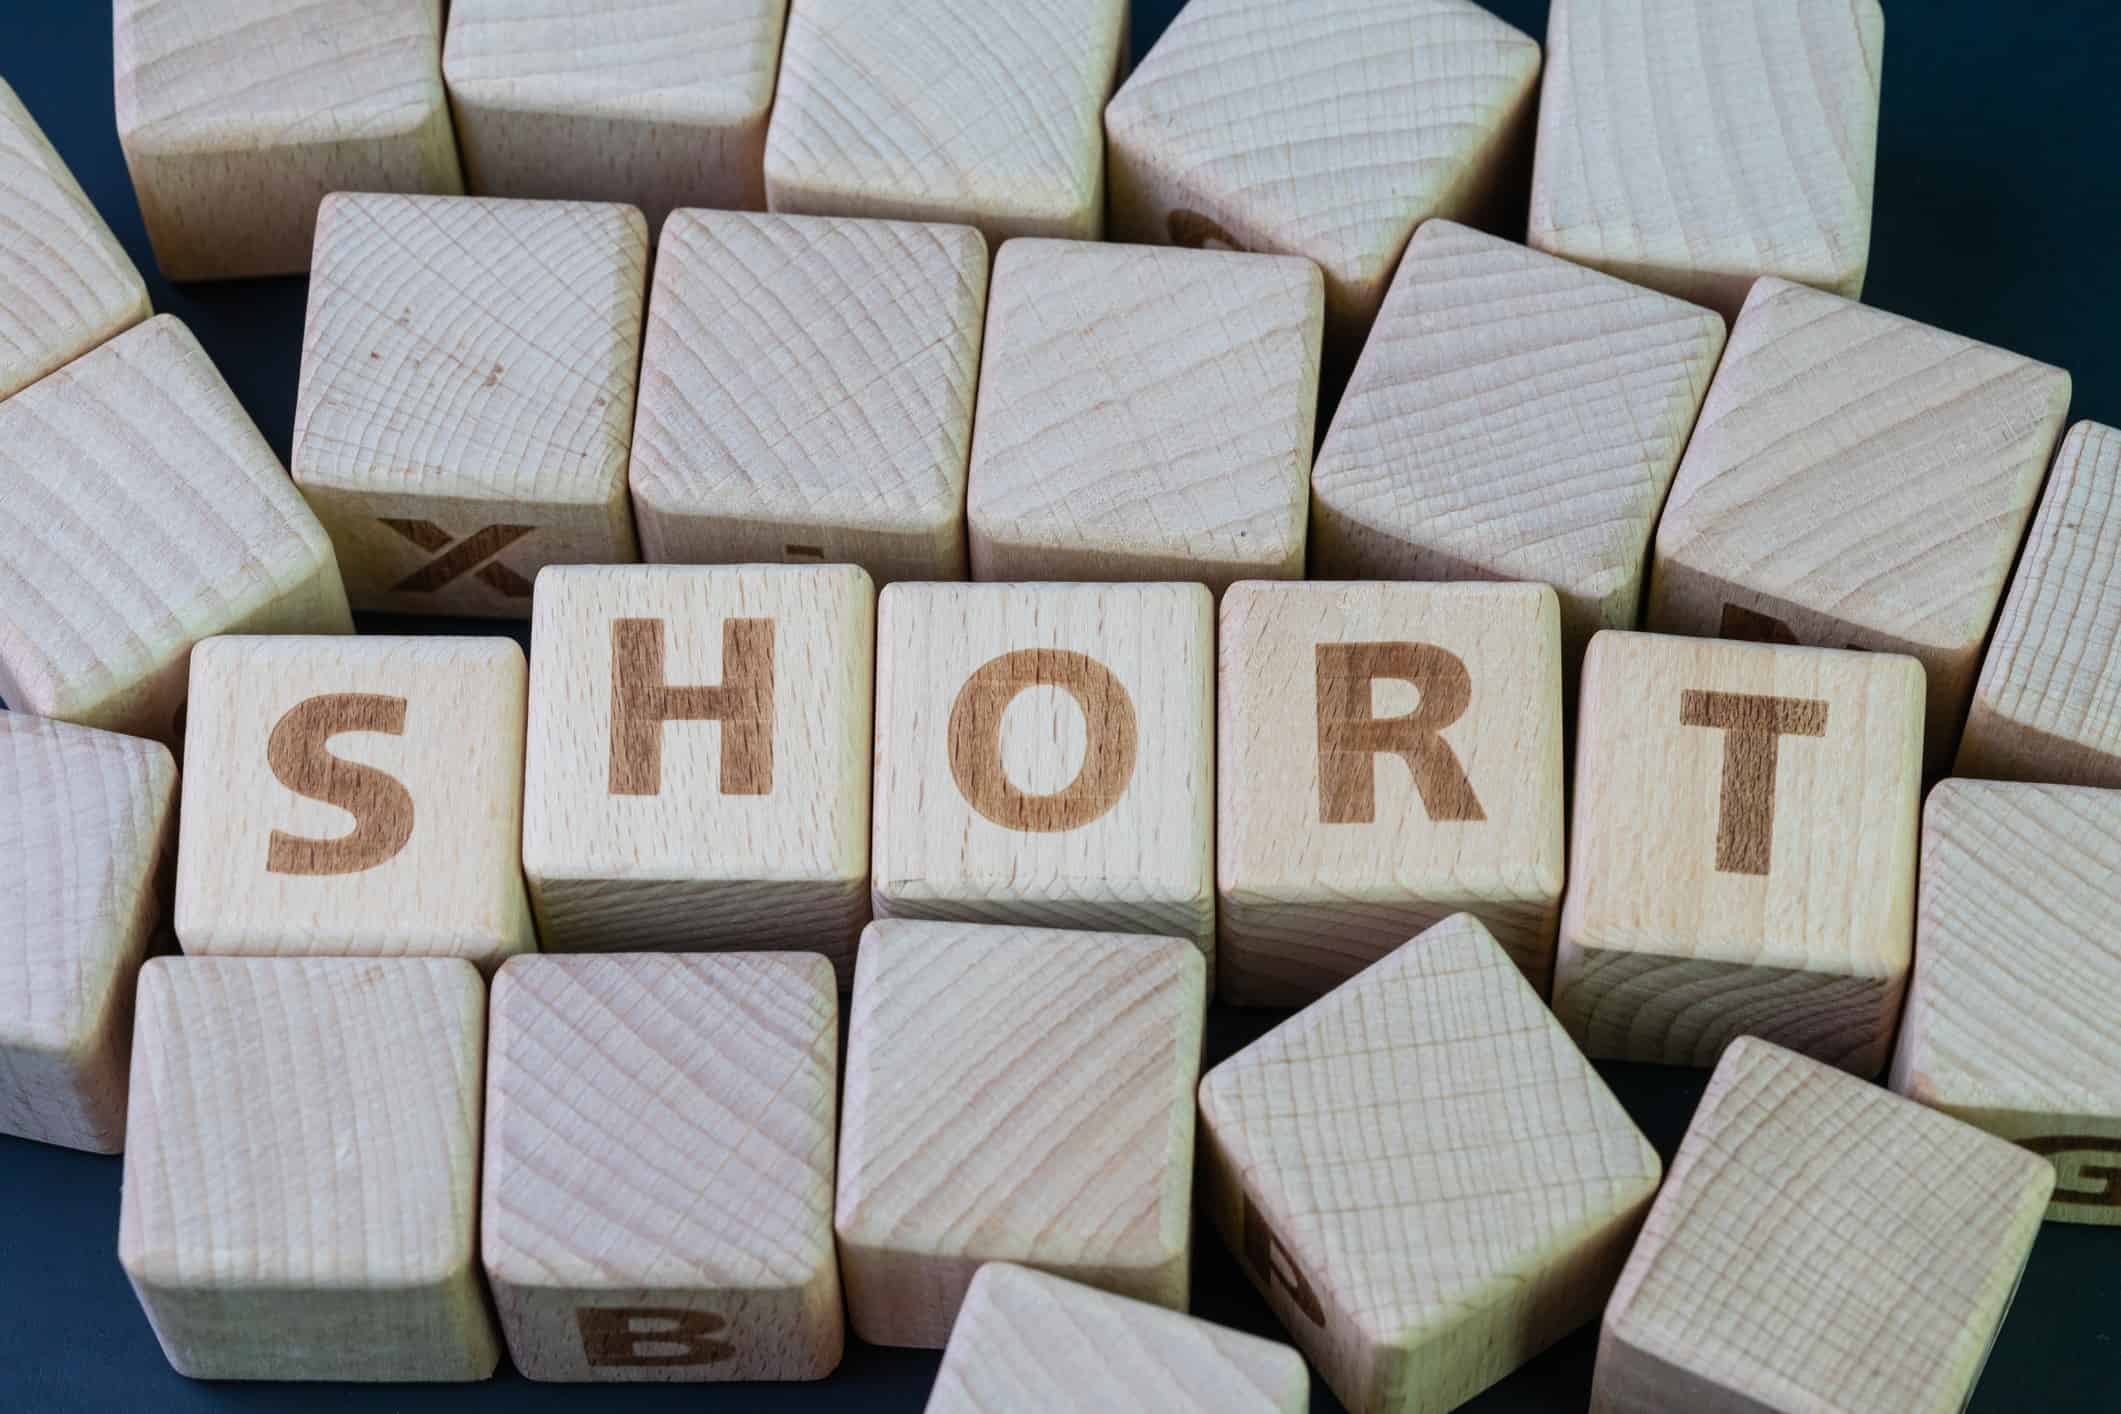 most shorted shares webjet